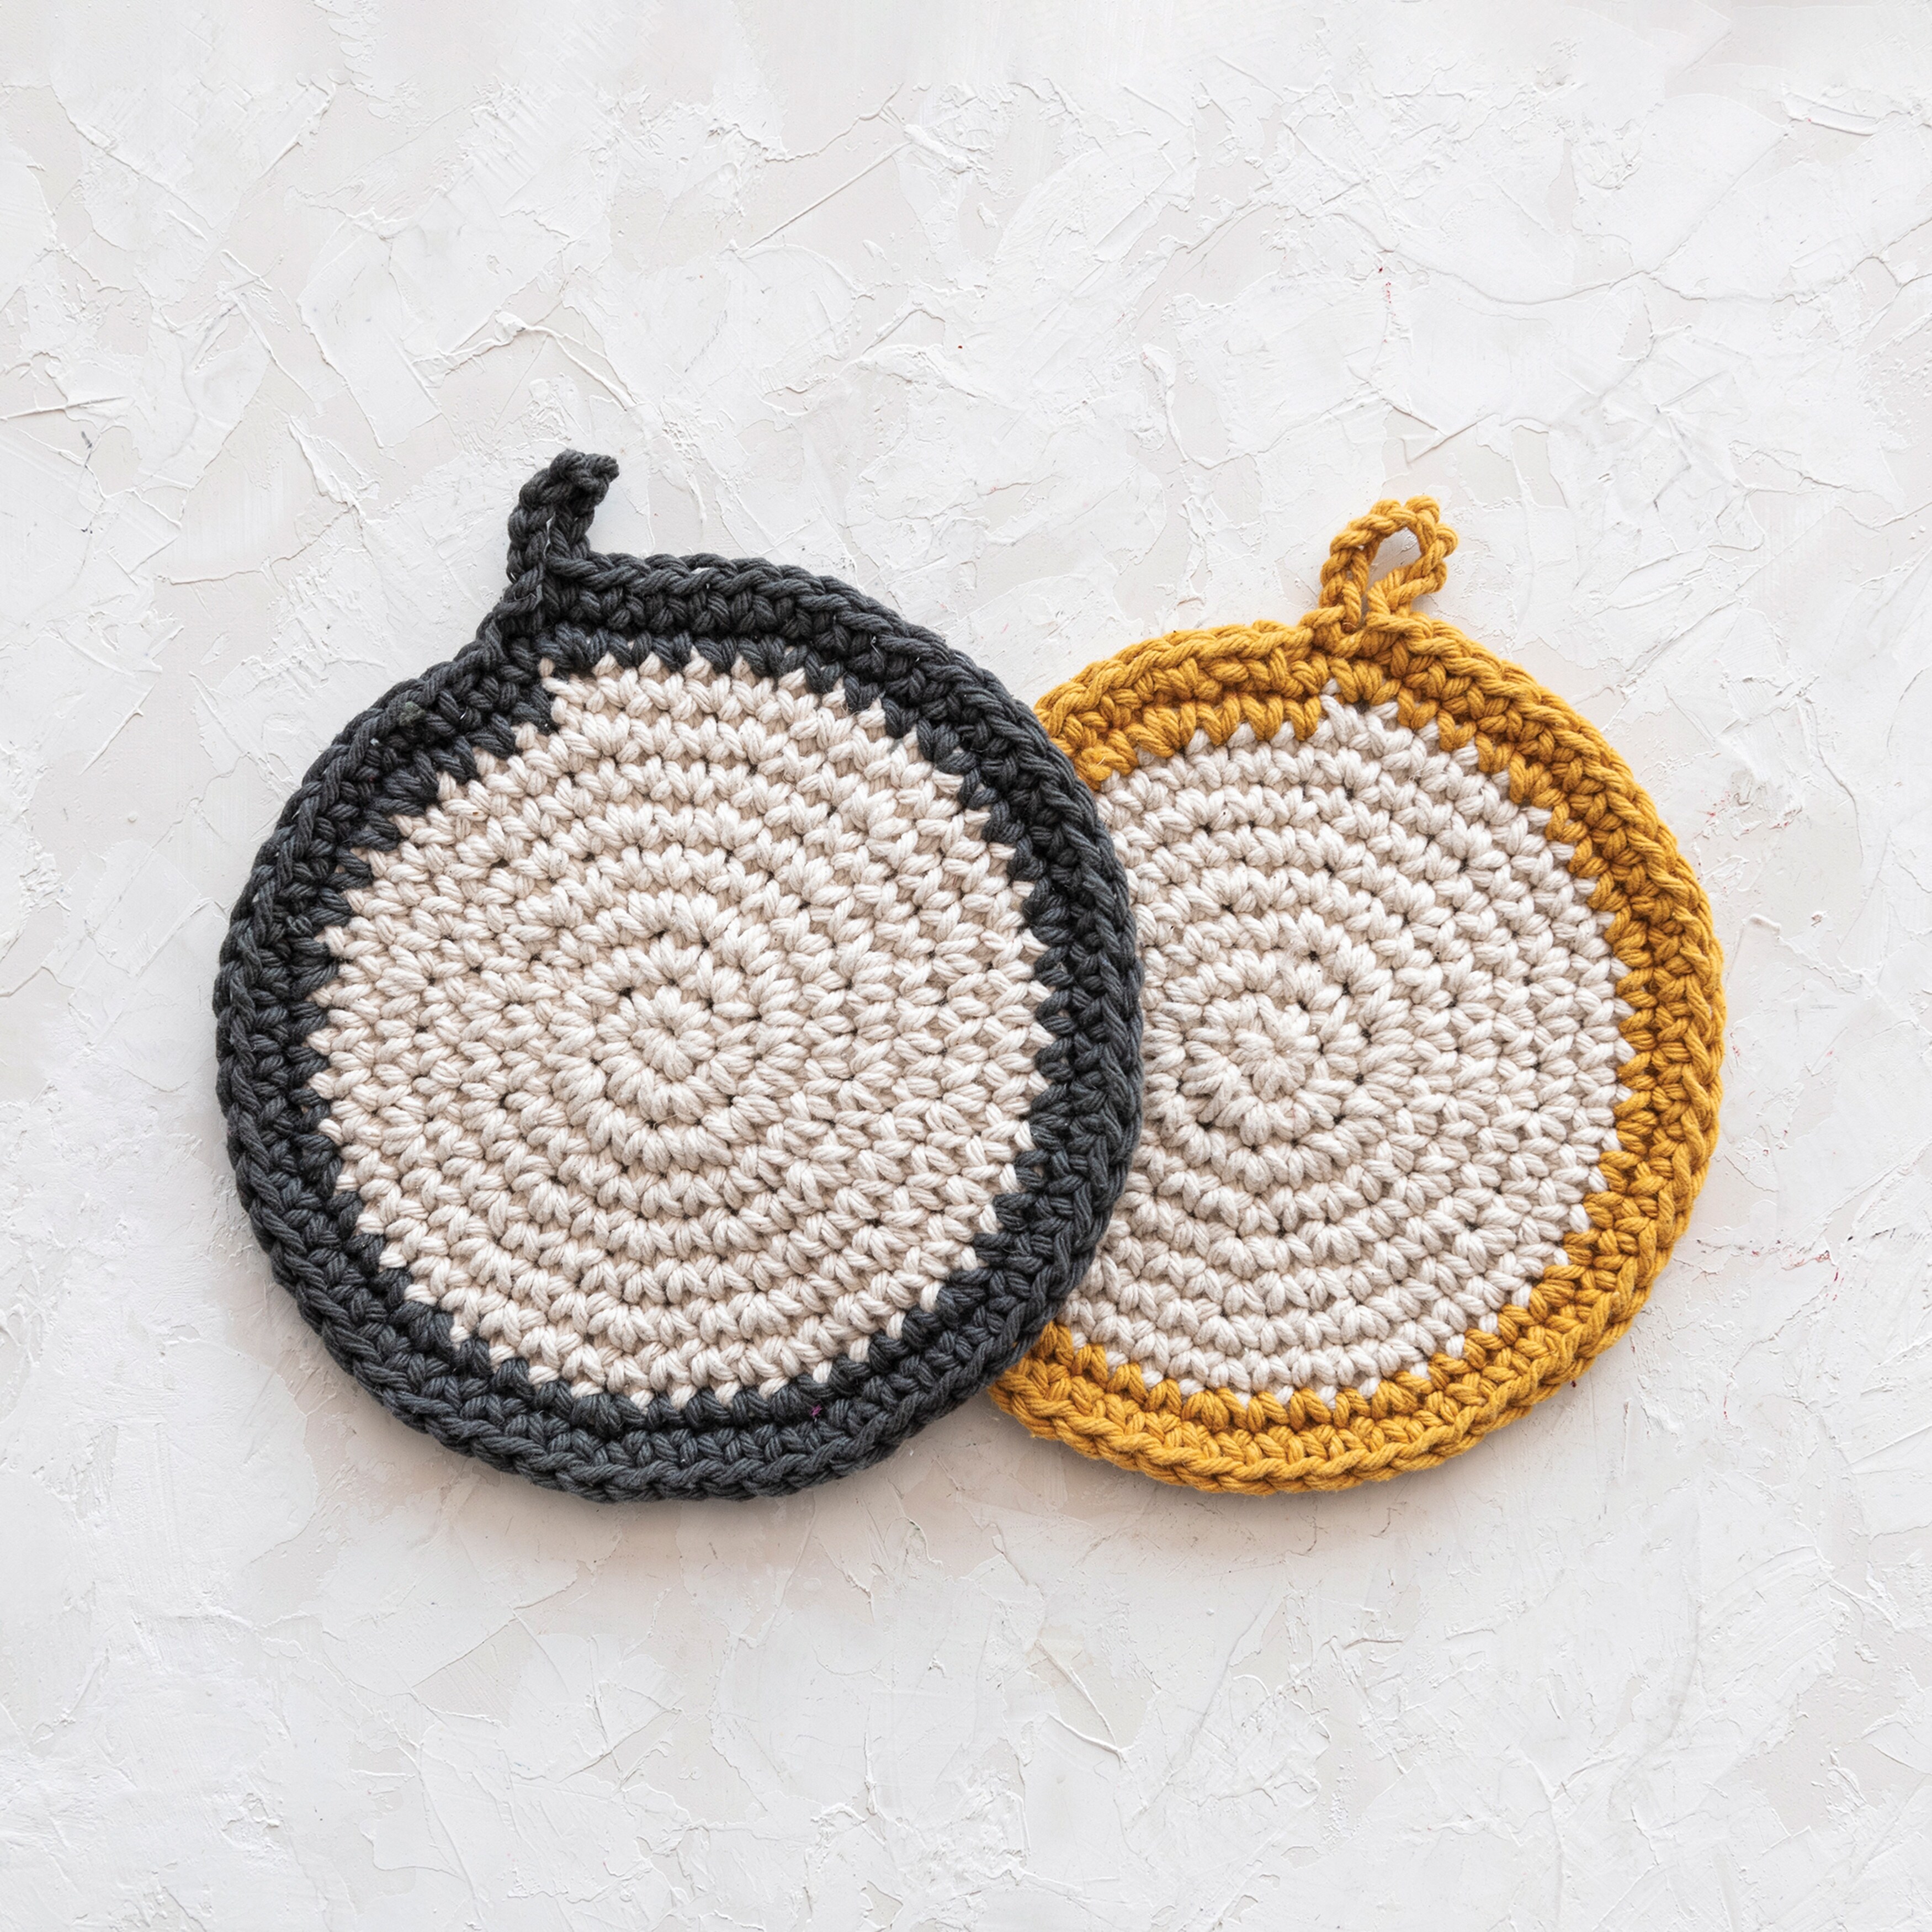 Cotton Crocheted Pot Holders - 8.0"L x 8.0"W x 0.3"H